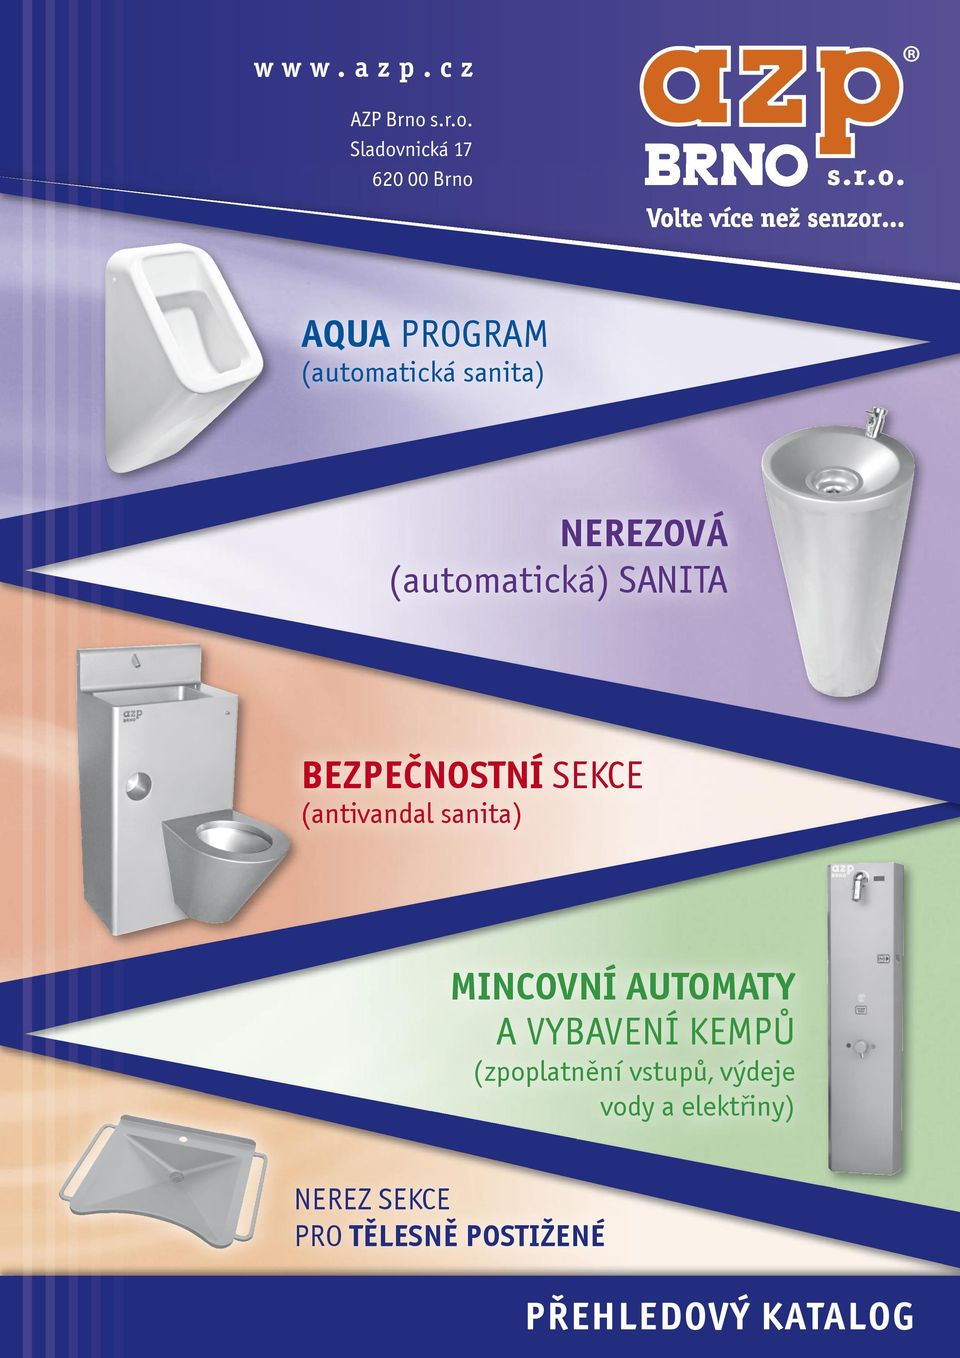 Sladovnická 17 620 00 Brno AQUA PROGRAM (automatická sanita) NEREZOVÁ